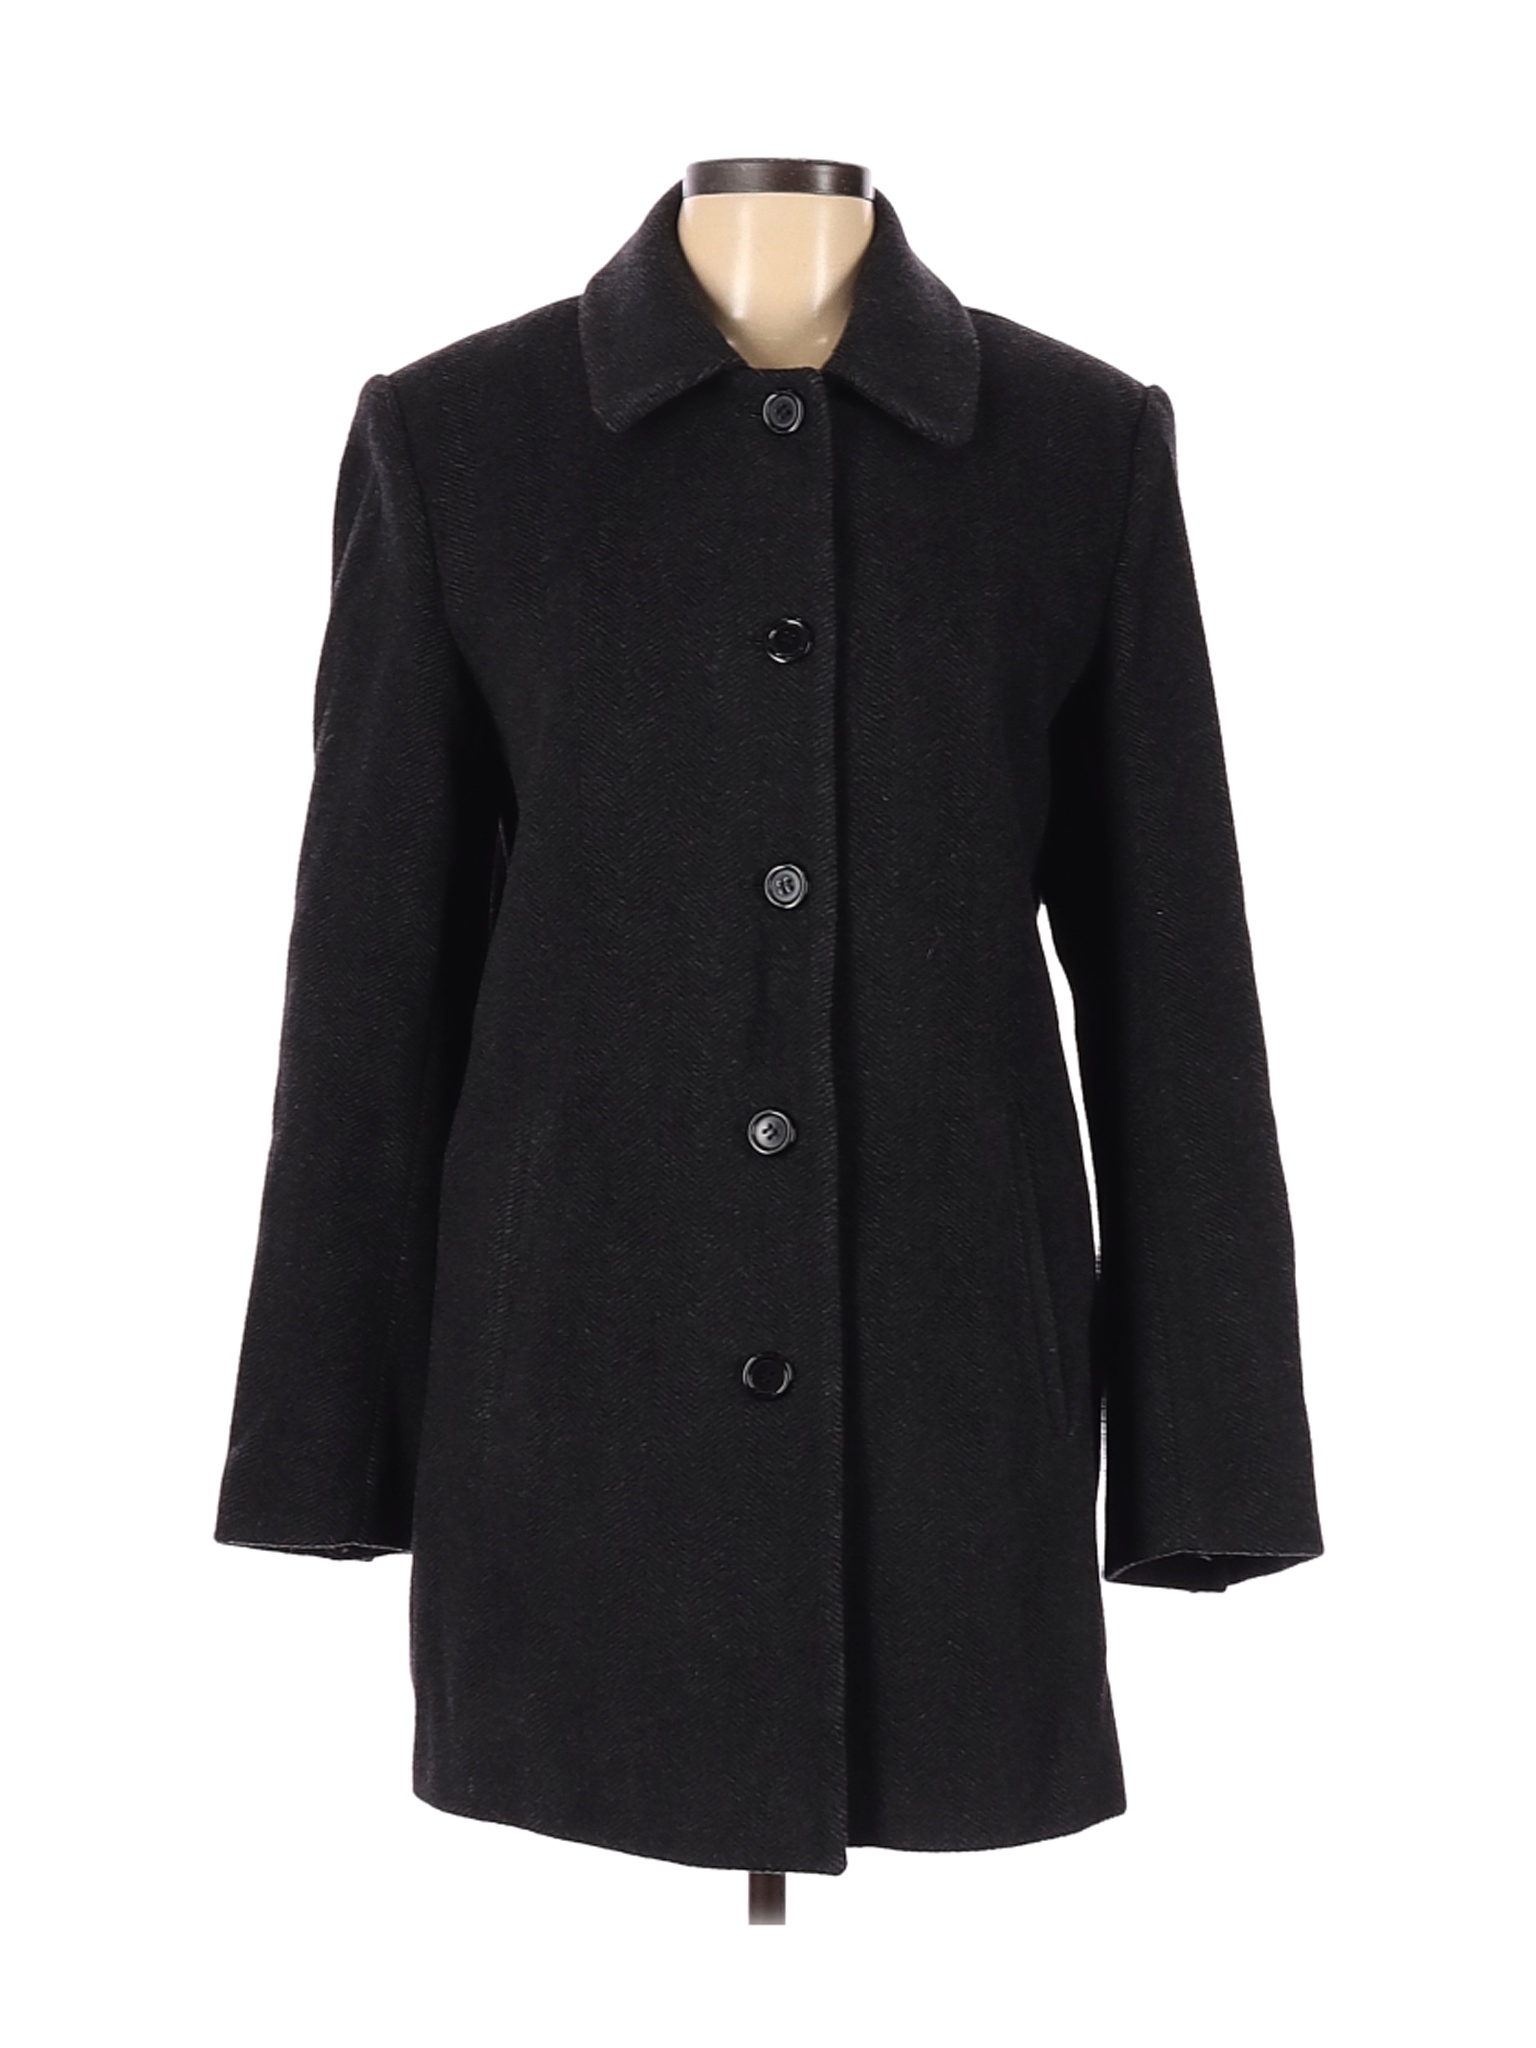 Liz Claiborne Women Black Wool Coat 10 | eBay